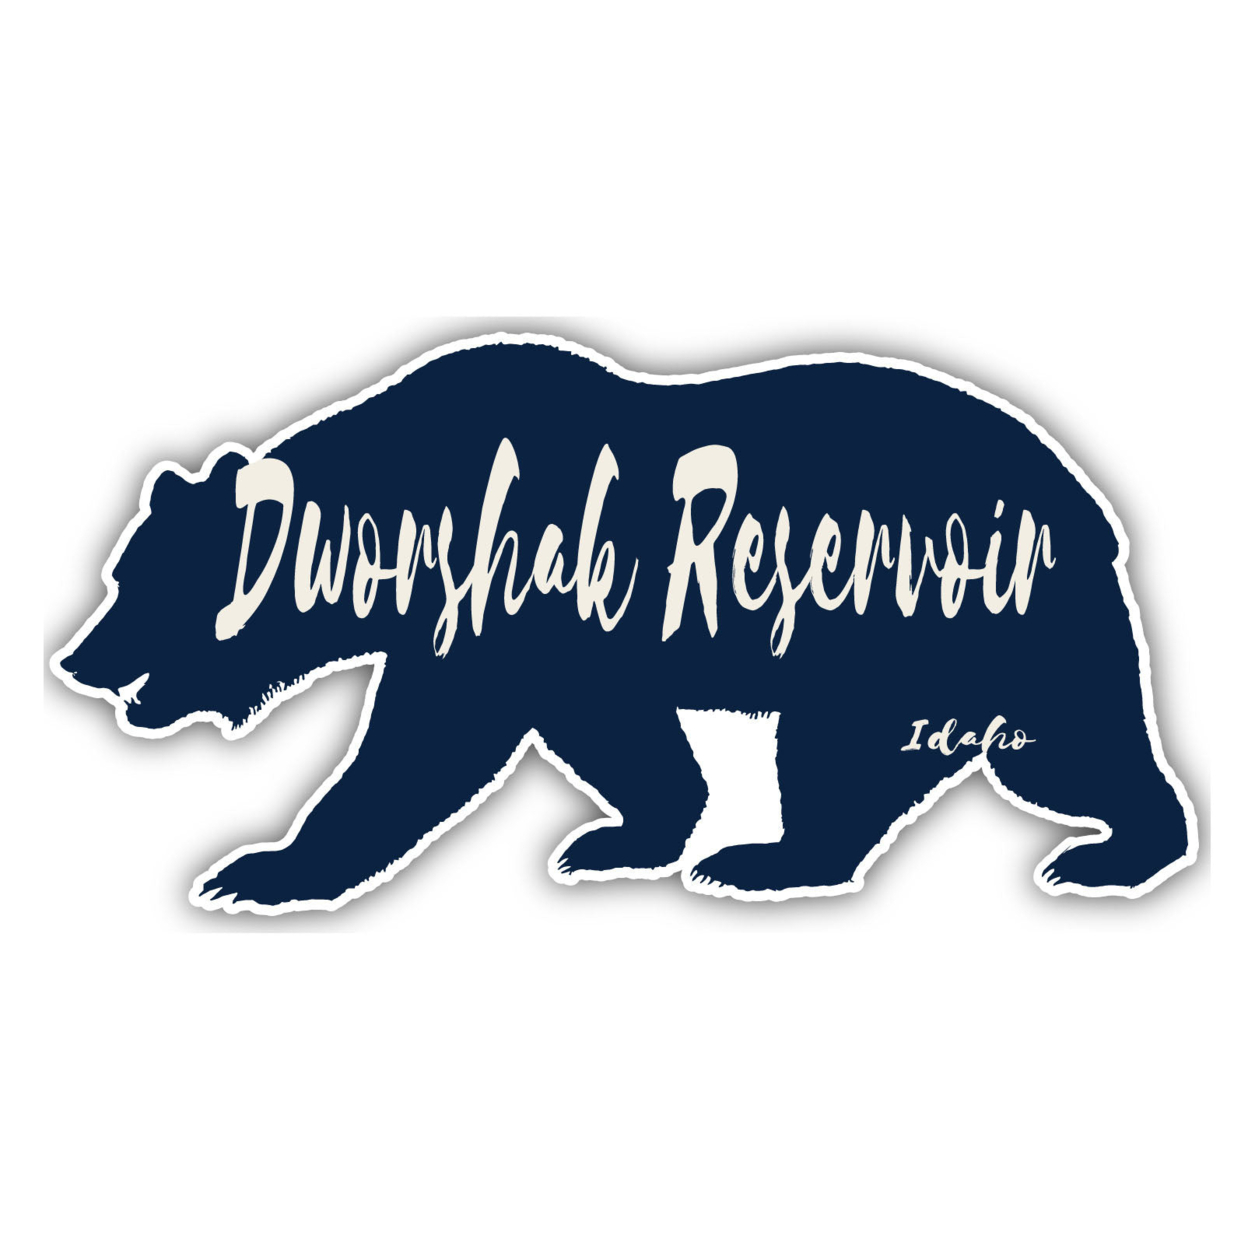 Dworshak Reservoir Idaho Souvenir Decorative Stickers (Choose Theme And Size) - 4-Pack, 6-Inch, Tent